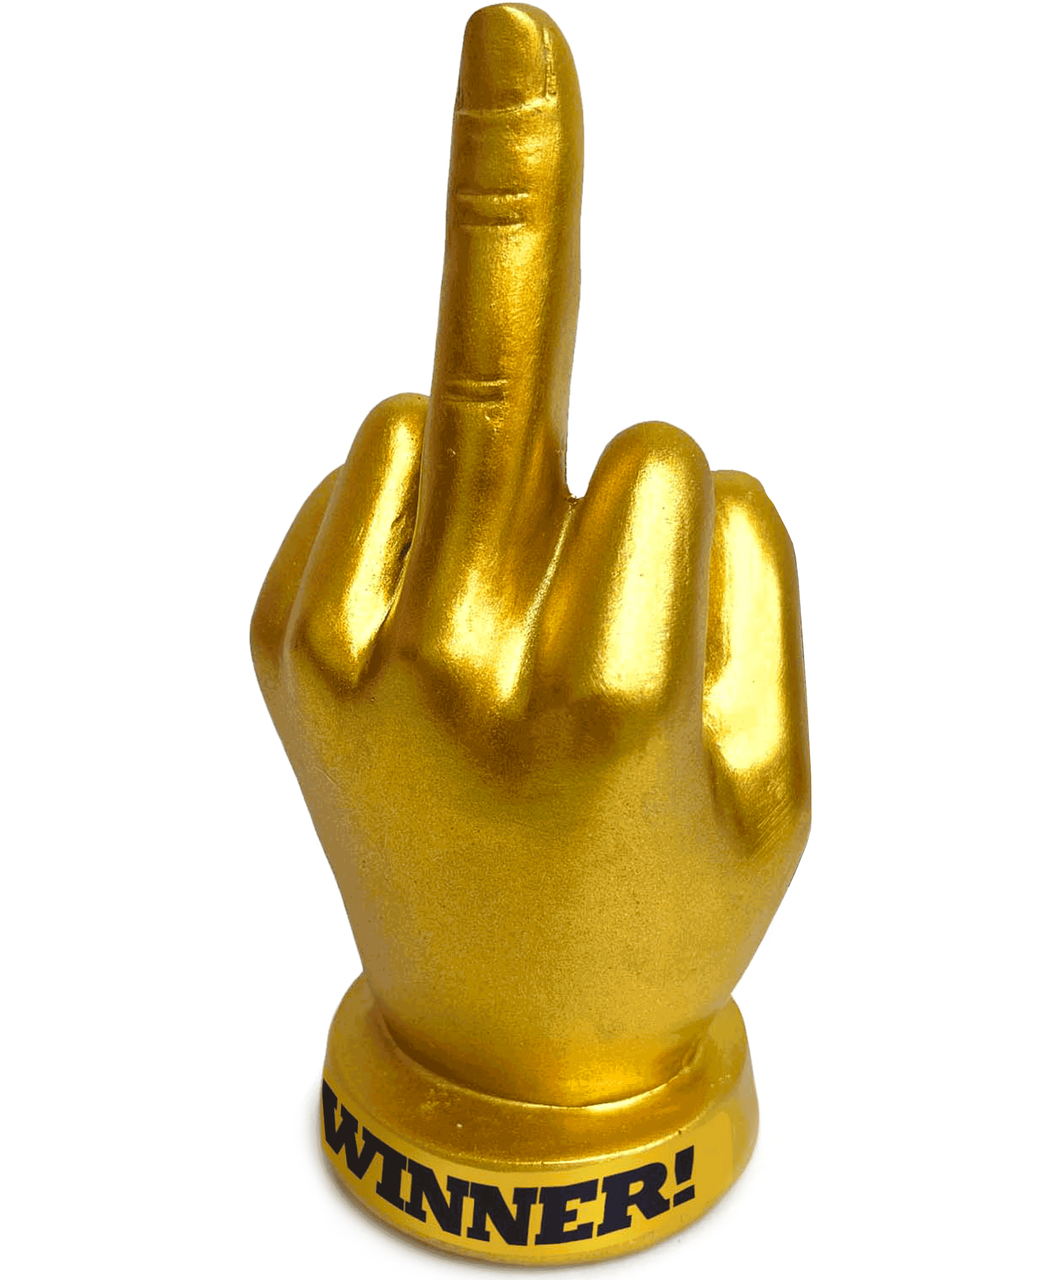 Little Genie Golden F-U Finger награда с надписью